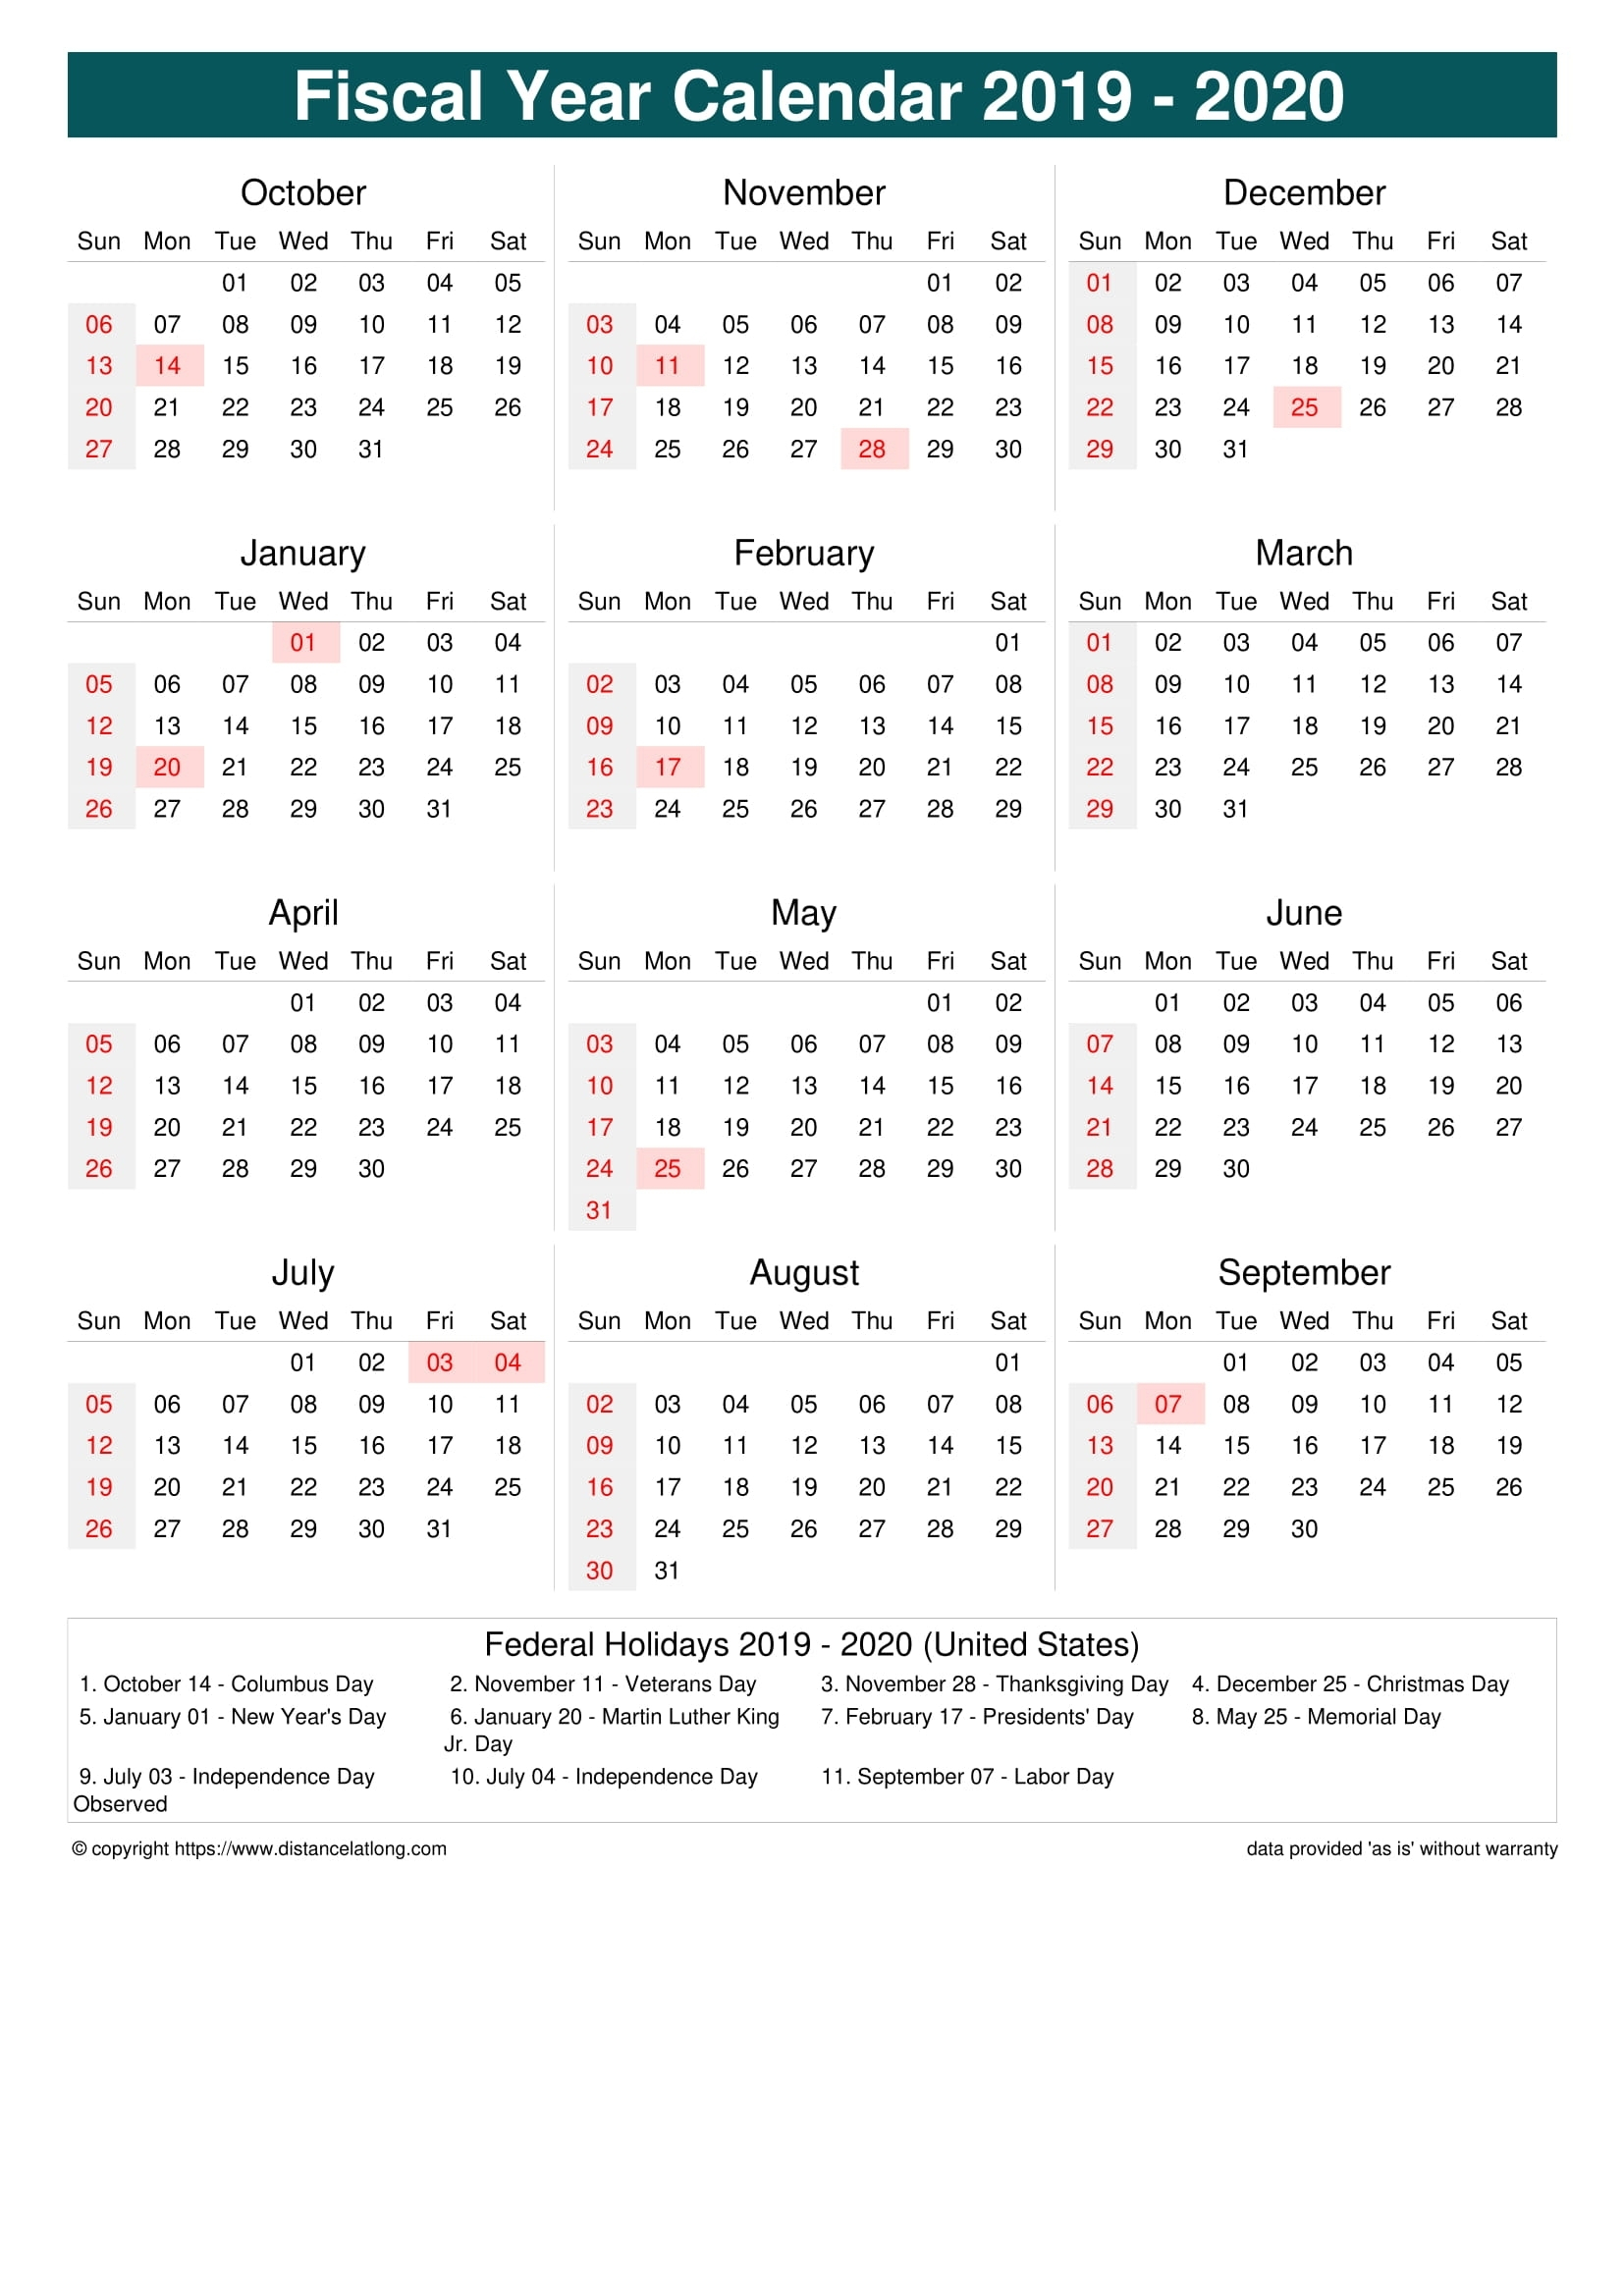 Financial Calendar 2019-2020 In Weeks - Calendar